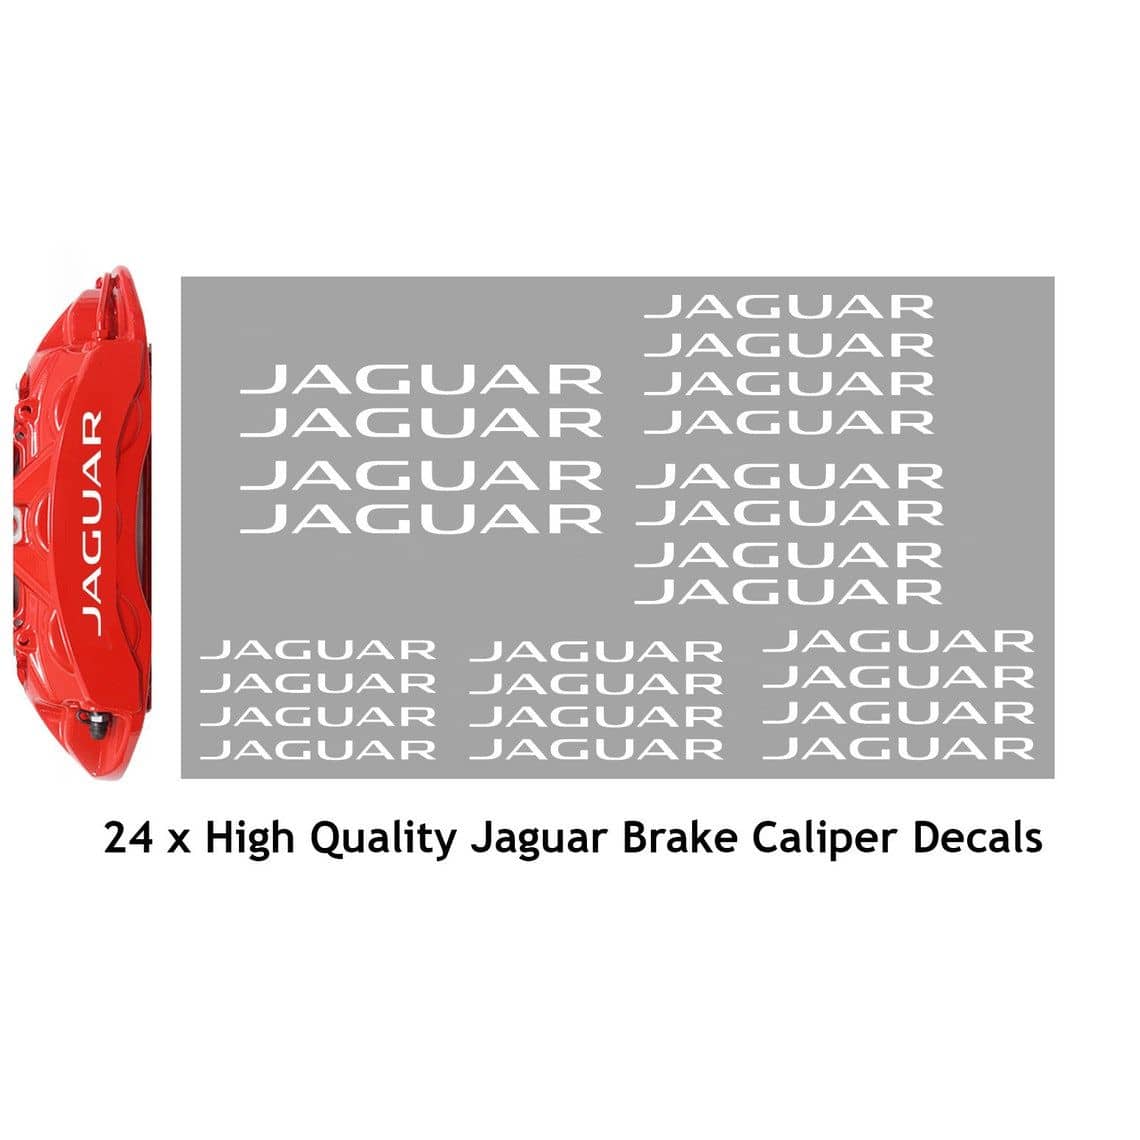 Miscellaneous - $1 Jaguar Brake caliper decals - New - 0  All Models - Phoenix, AZ 85251, United States